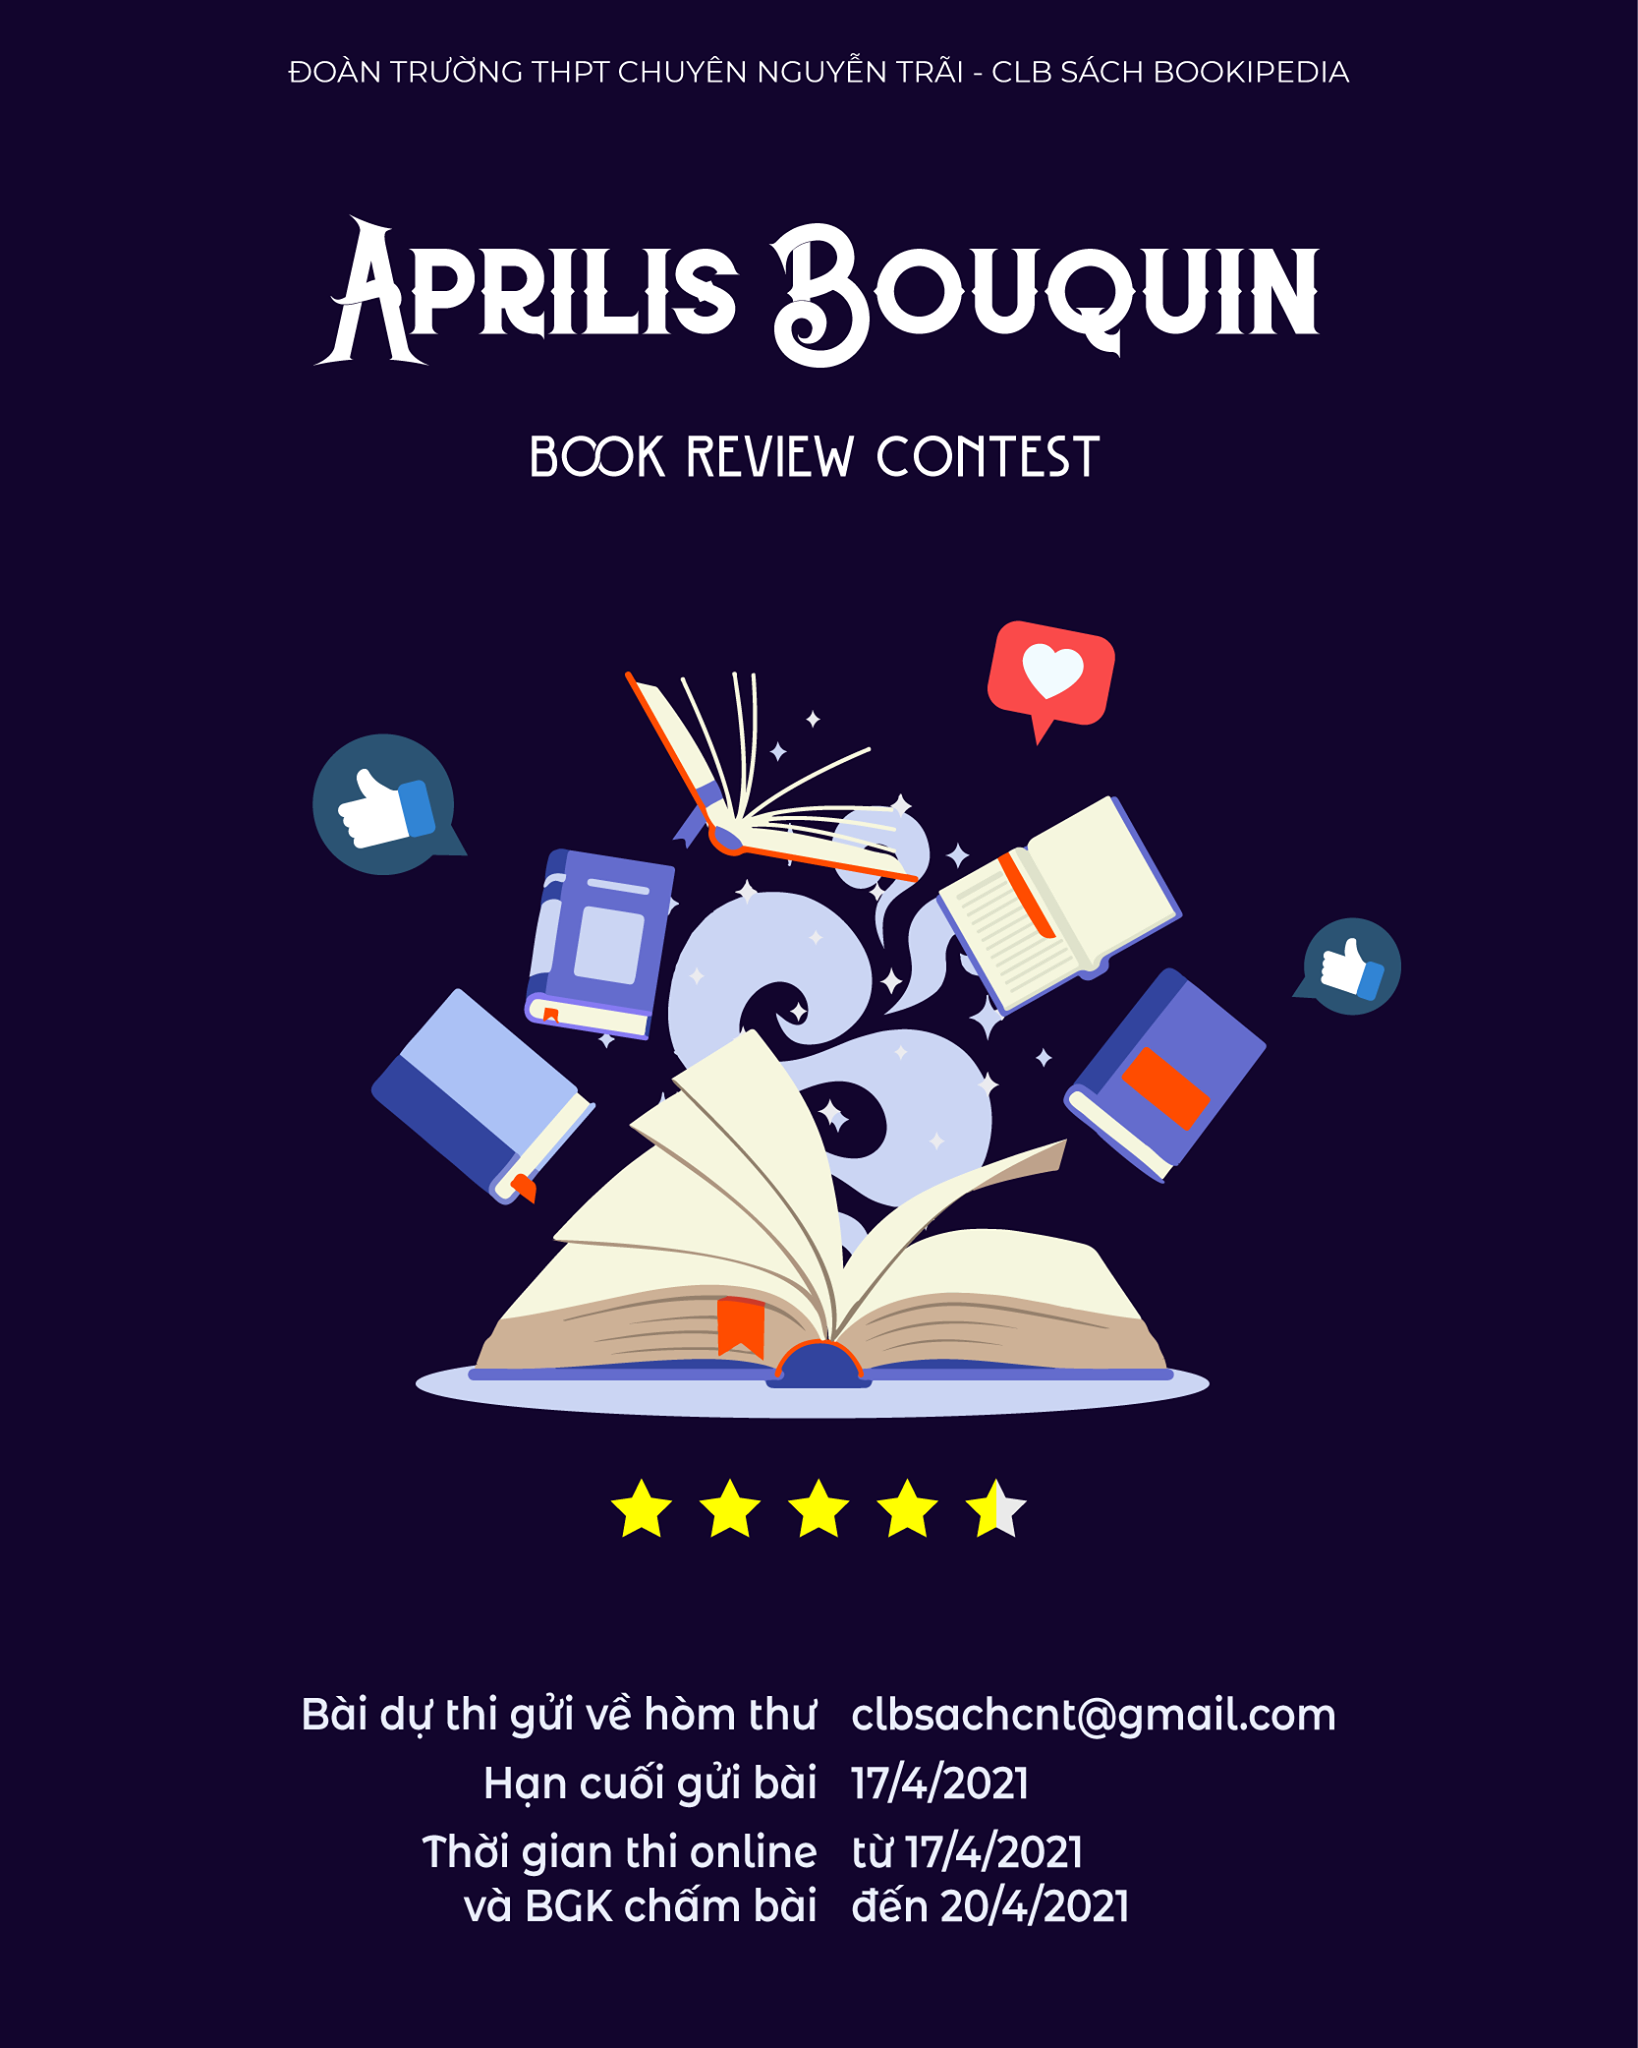 Phát động cuộc thi Review Sách “APRILIS BOUQUIN”